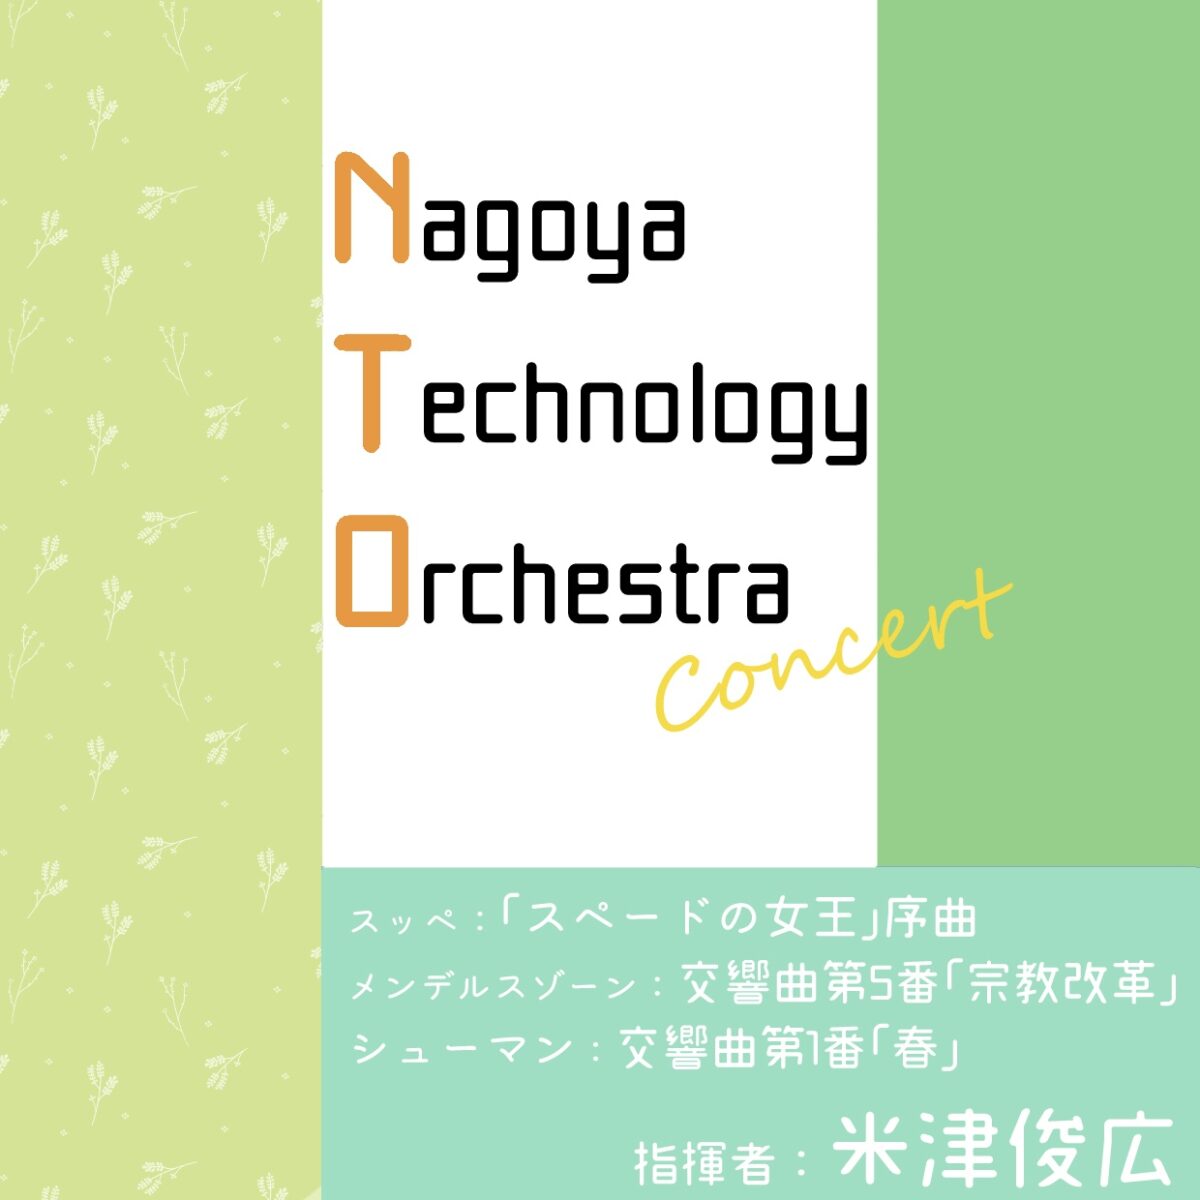 Nagoya Technology Orchestra Concert